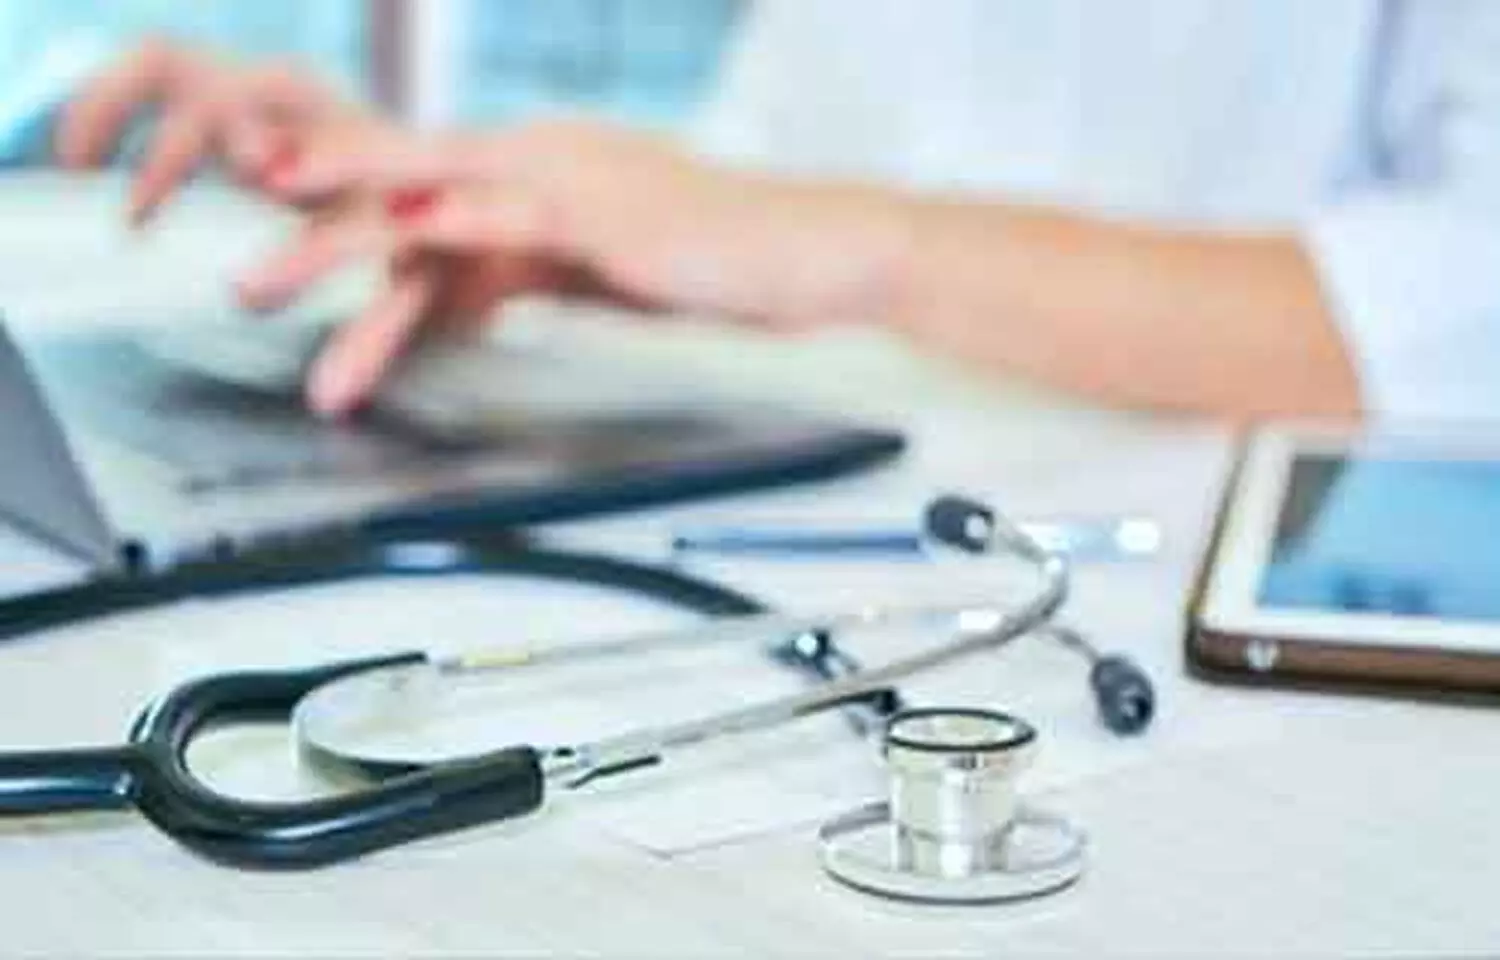 Tamil Nadu to Focus on Improving Medical Infrastructure